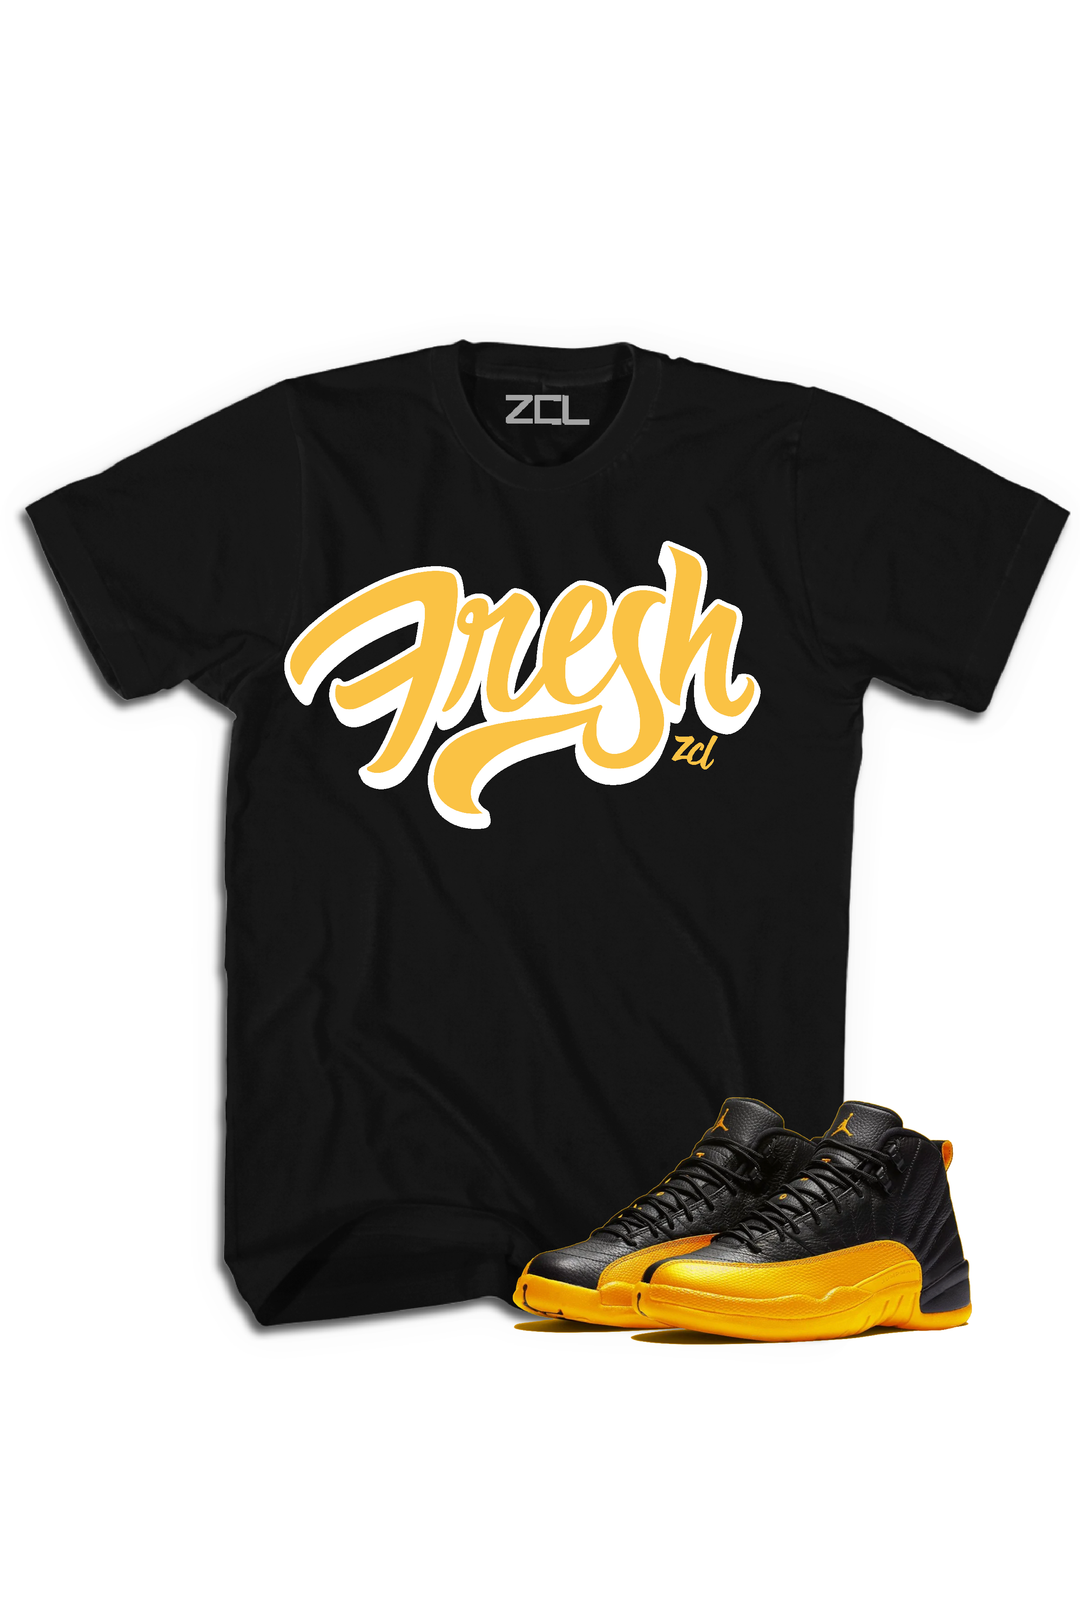 Air Jordan Retro 12 "Fresh" Tee University Gold - Zamage